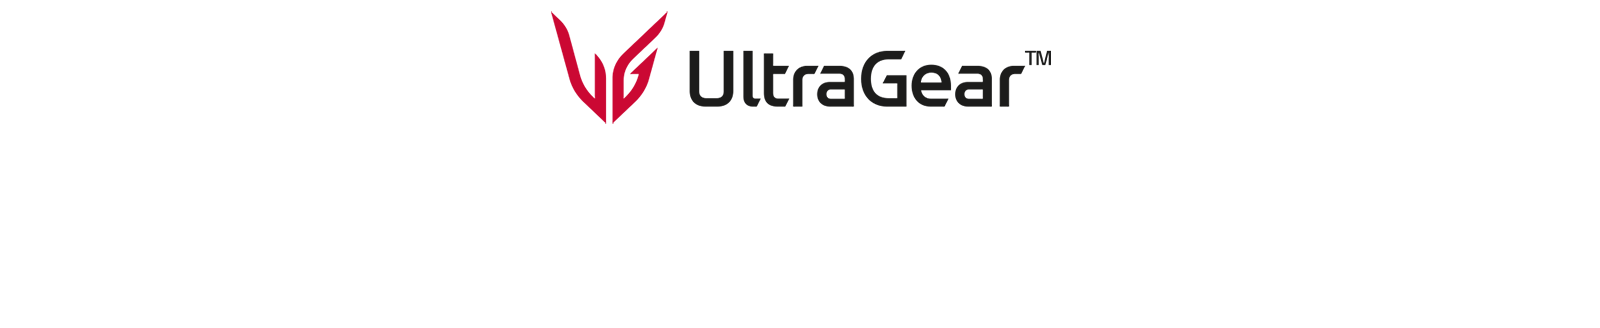 Logotip UltraGear™.